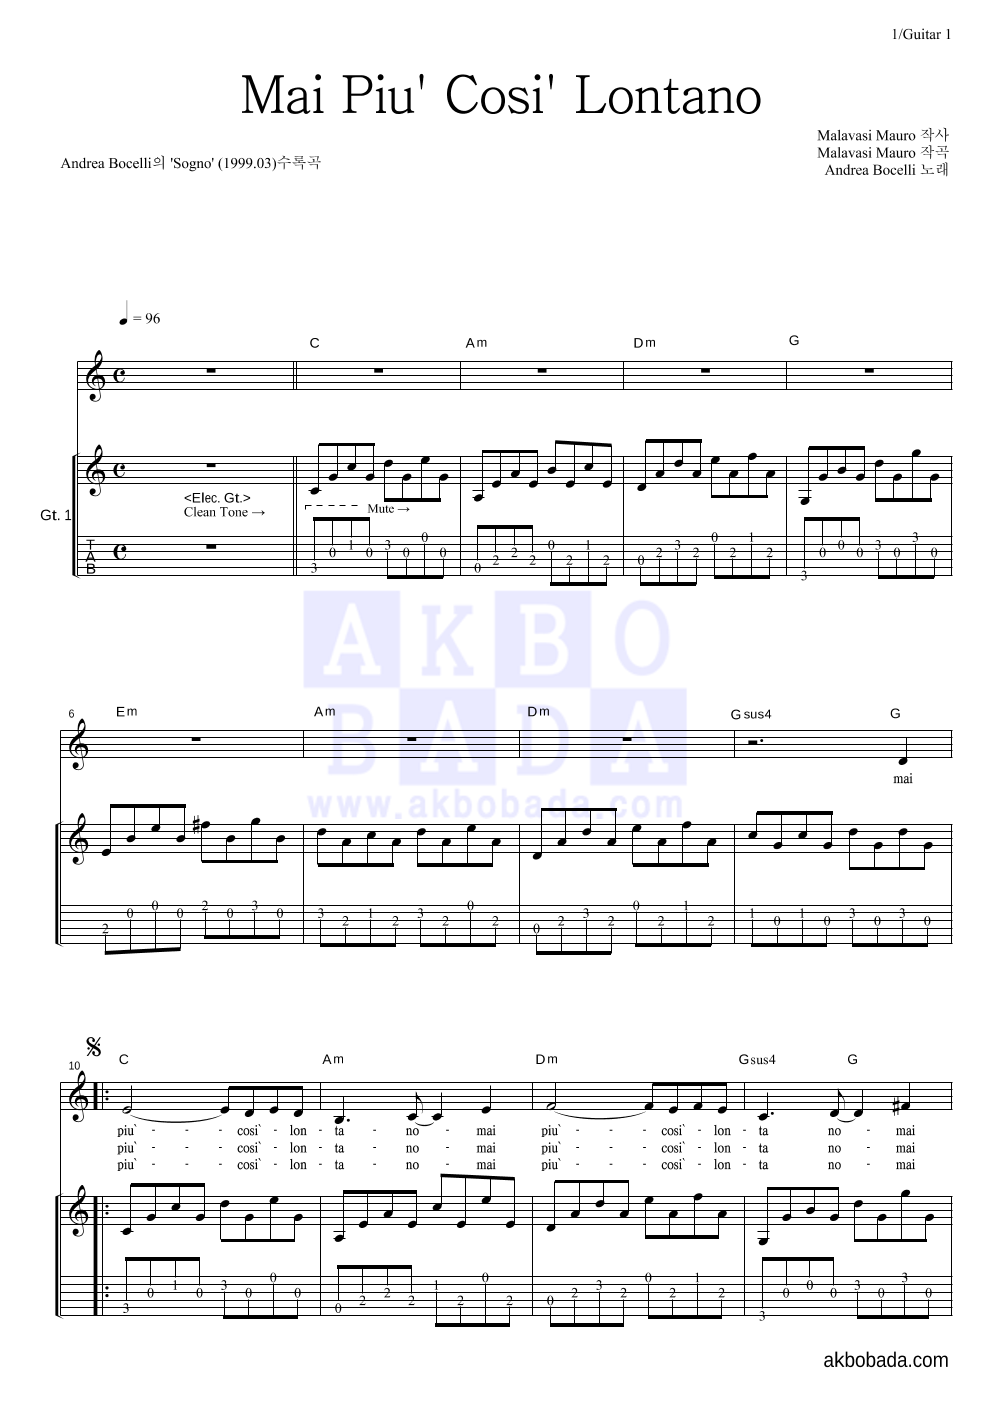 Andrea Bocelli - Mai Piu' Cosi' Lontano 기타 악보 